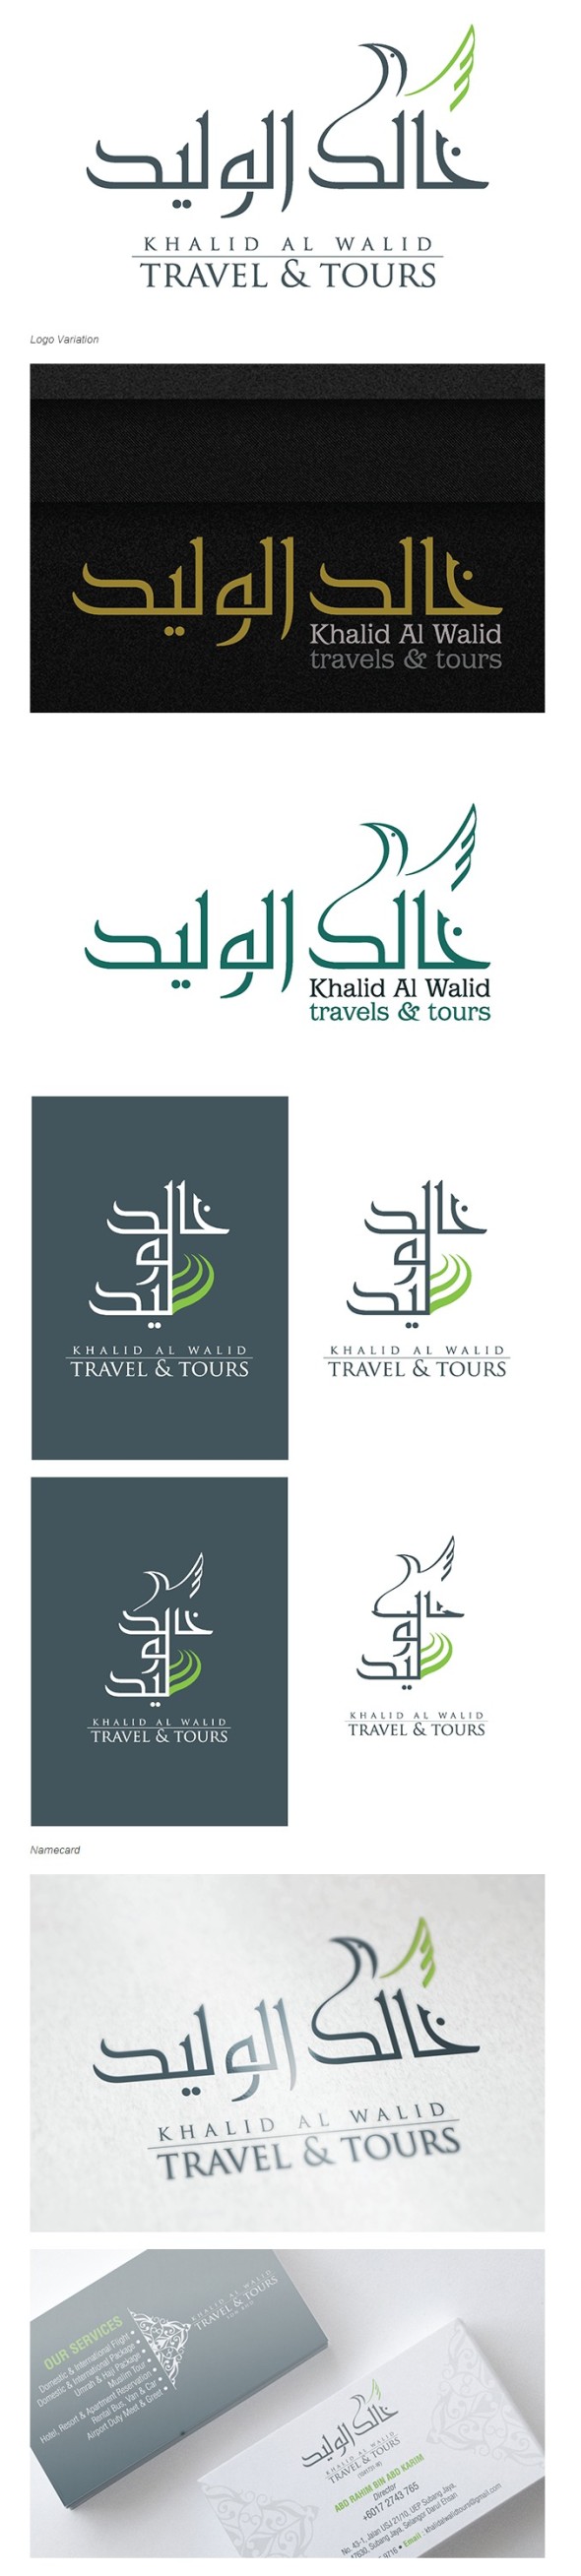 Arabic Branding Khalid Al Walid Travel